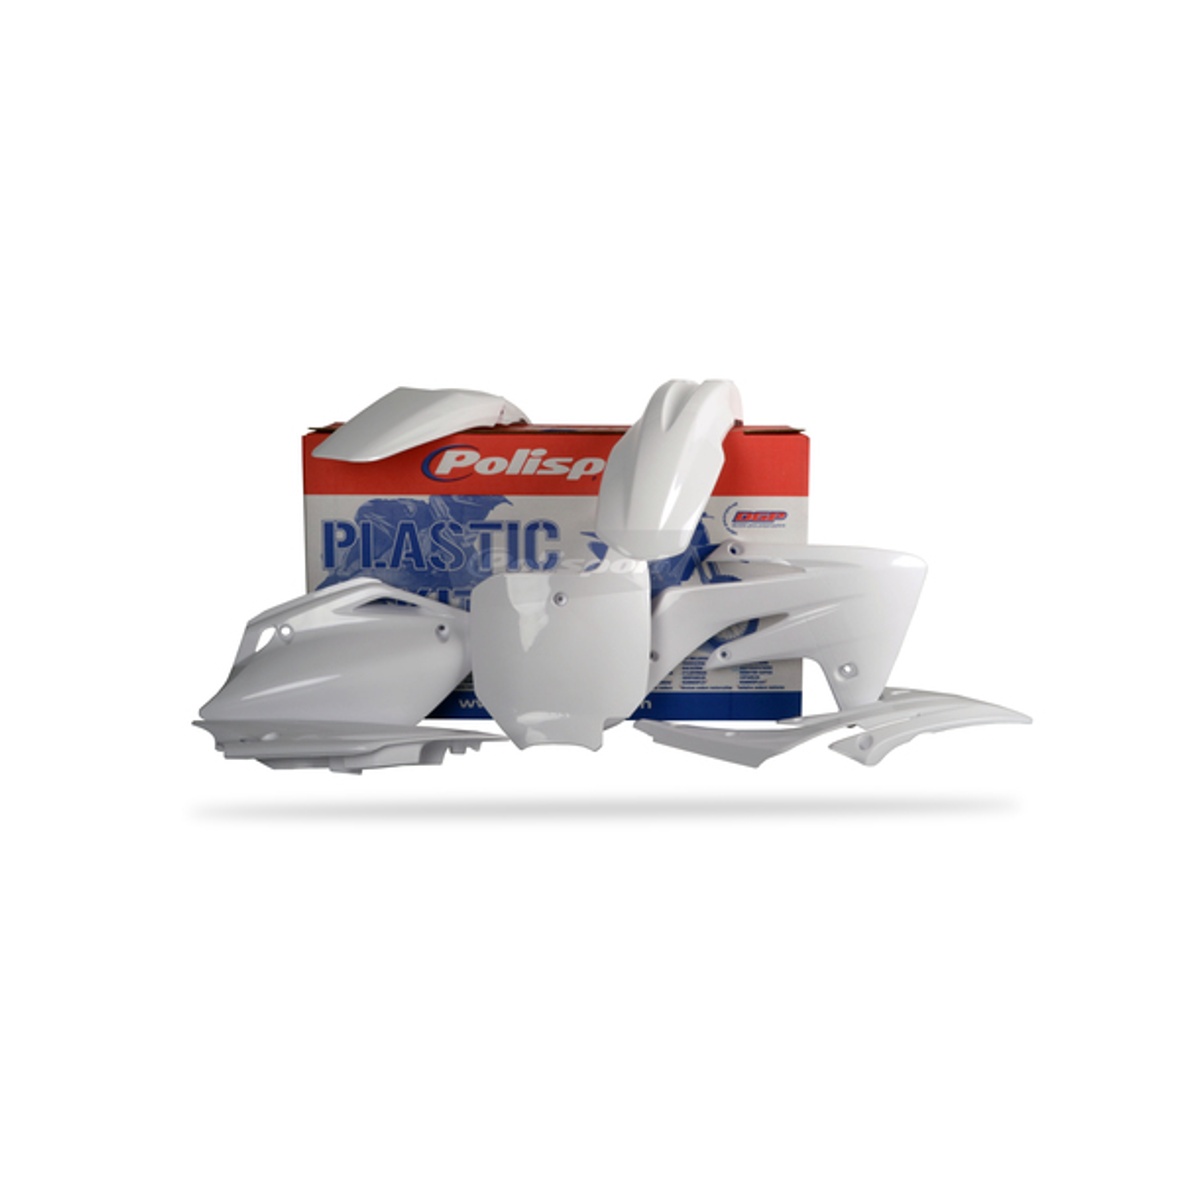 Polisport Plastics Kit White for Honda CRF250R CRF 250R 08-09 